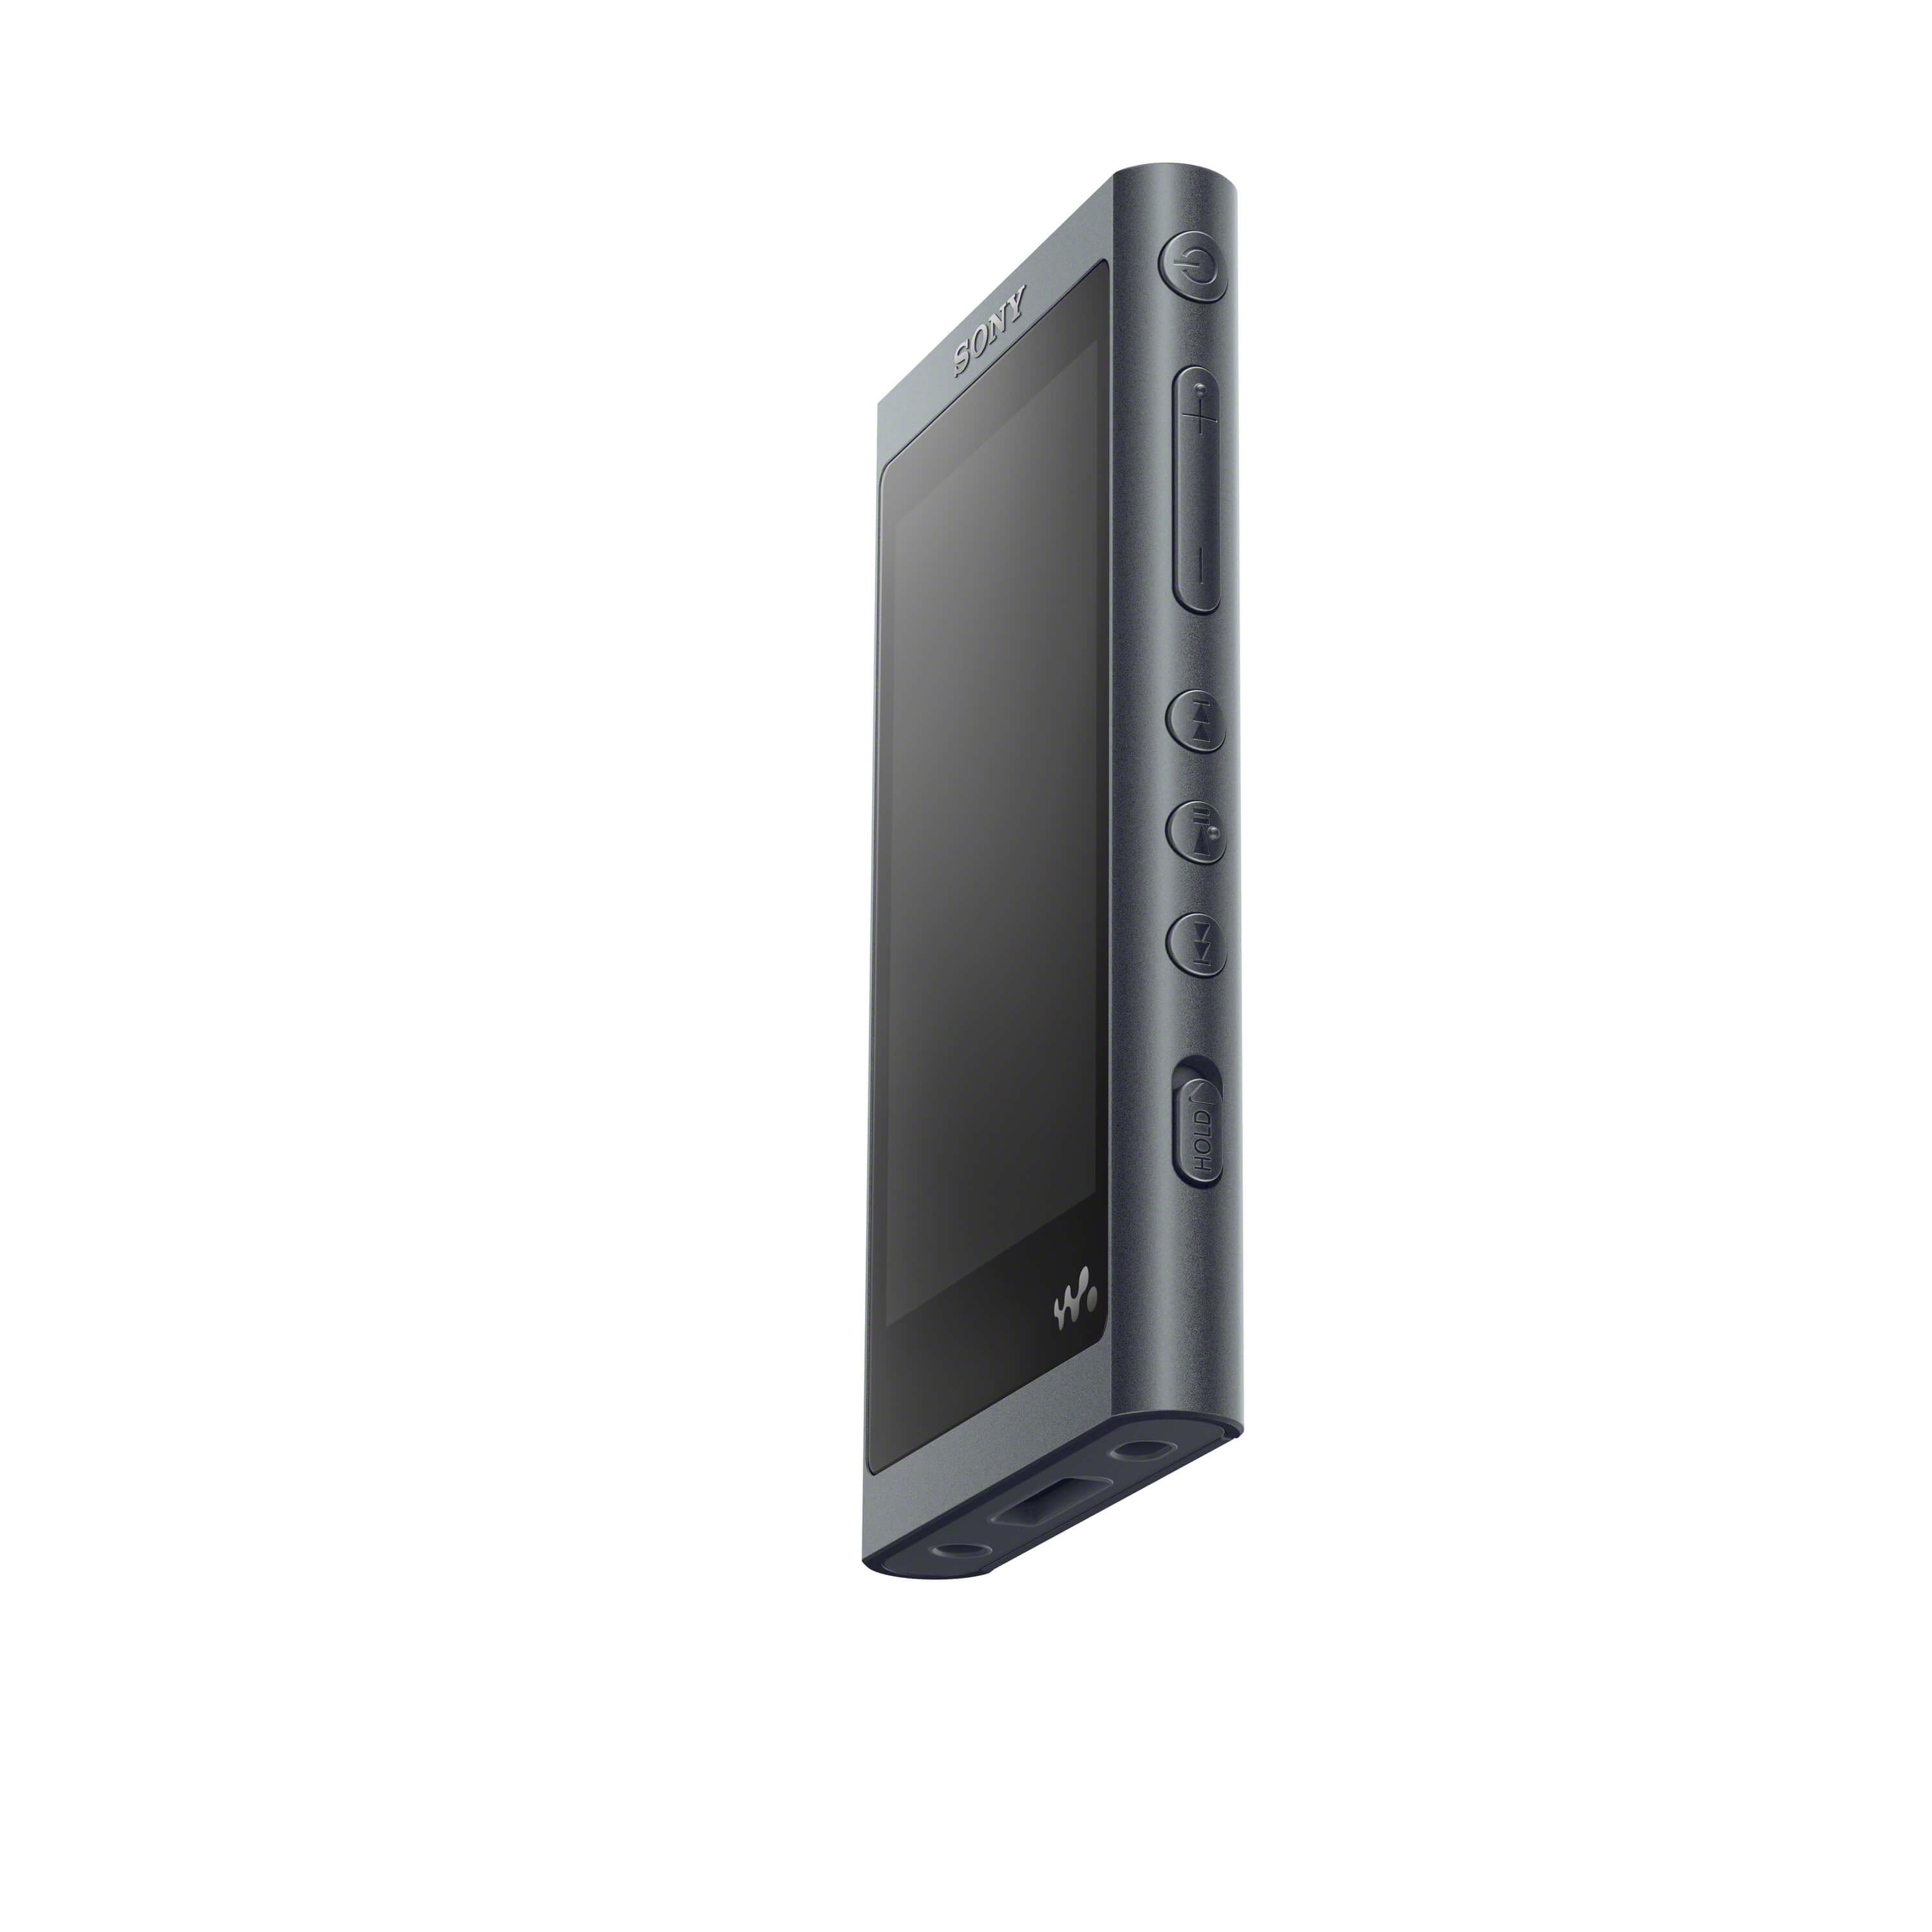 NW-A55 高解析音質Walkman(藍) Sony 台灣官方購物網站- Sony Store, Online (Taiwan)